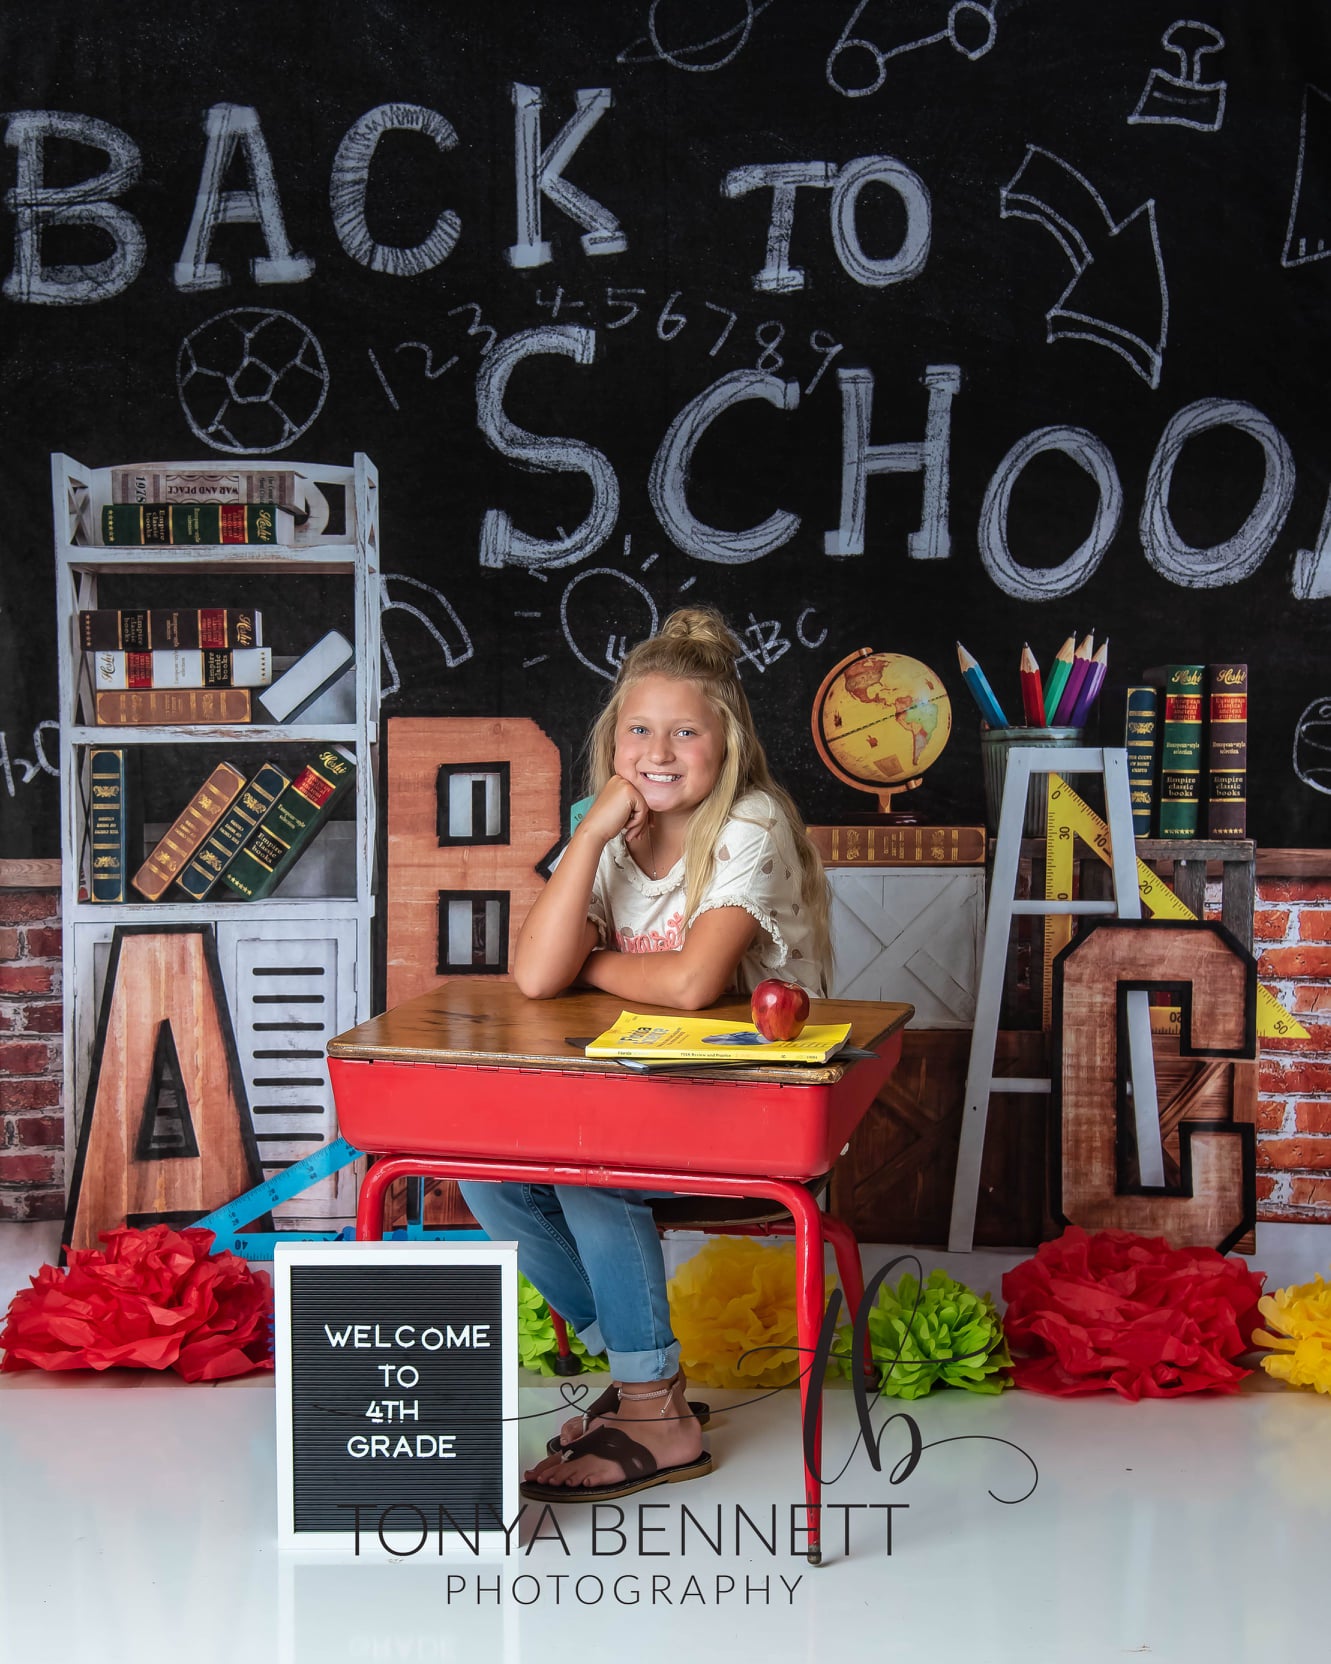 Kate Back To School Backdrop Designed by Emetselch